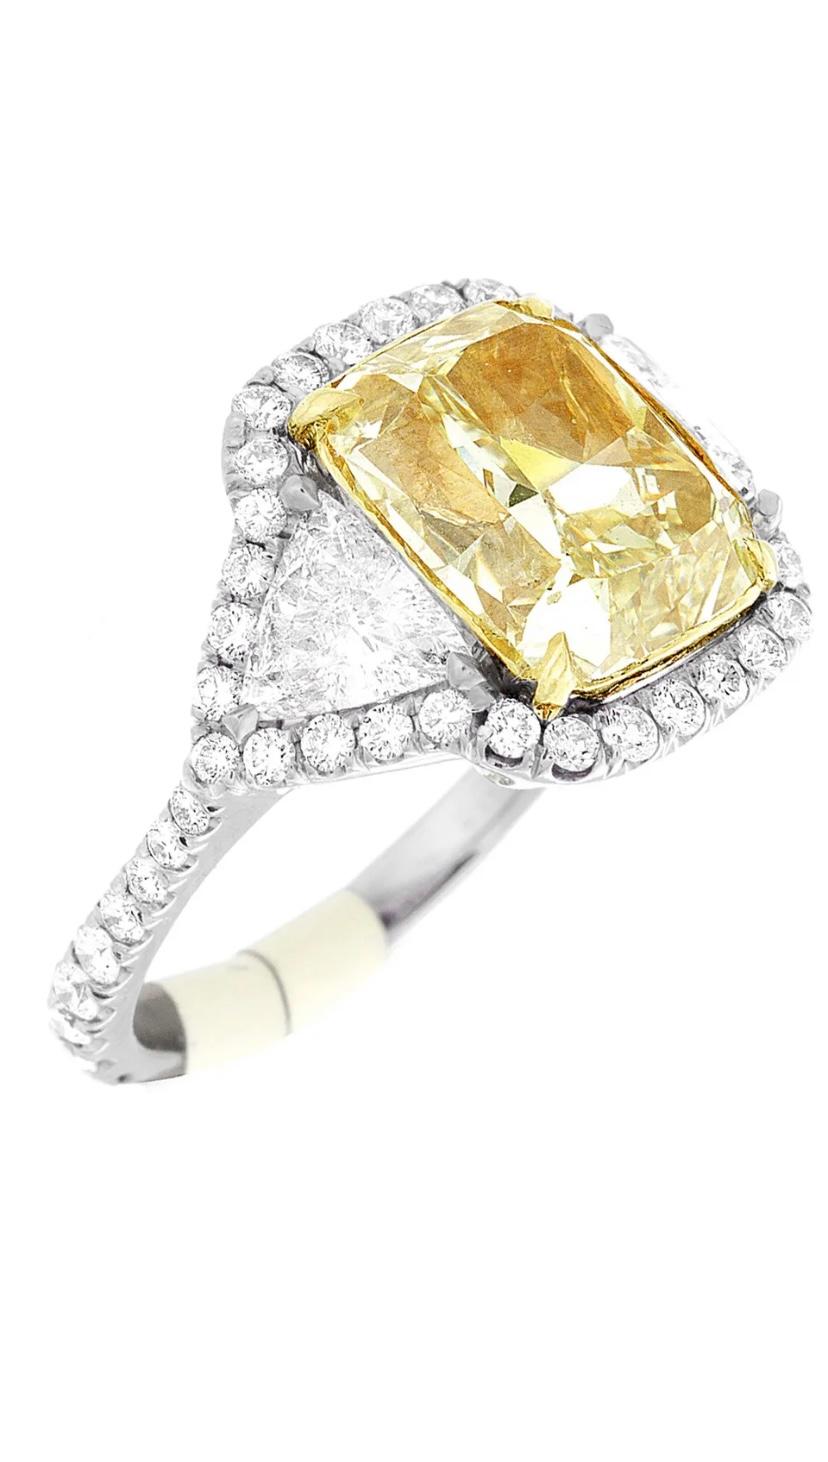 Cushion Cut GIA Certified Fancy Yellow Diamond of 5.01 Carats Ring VVS2 For Sale